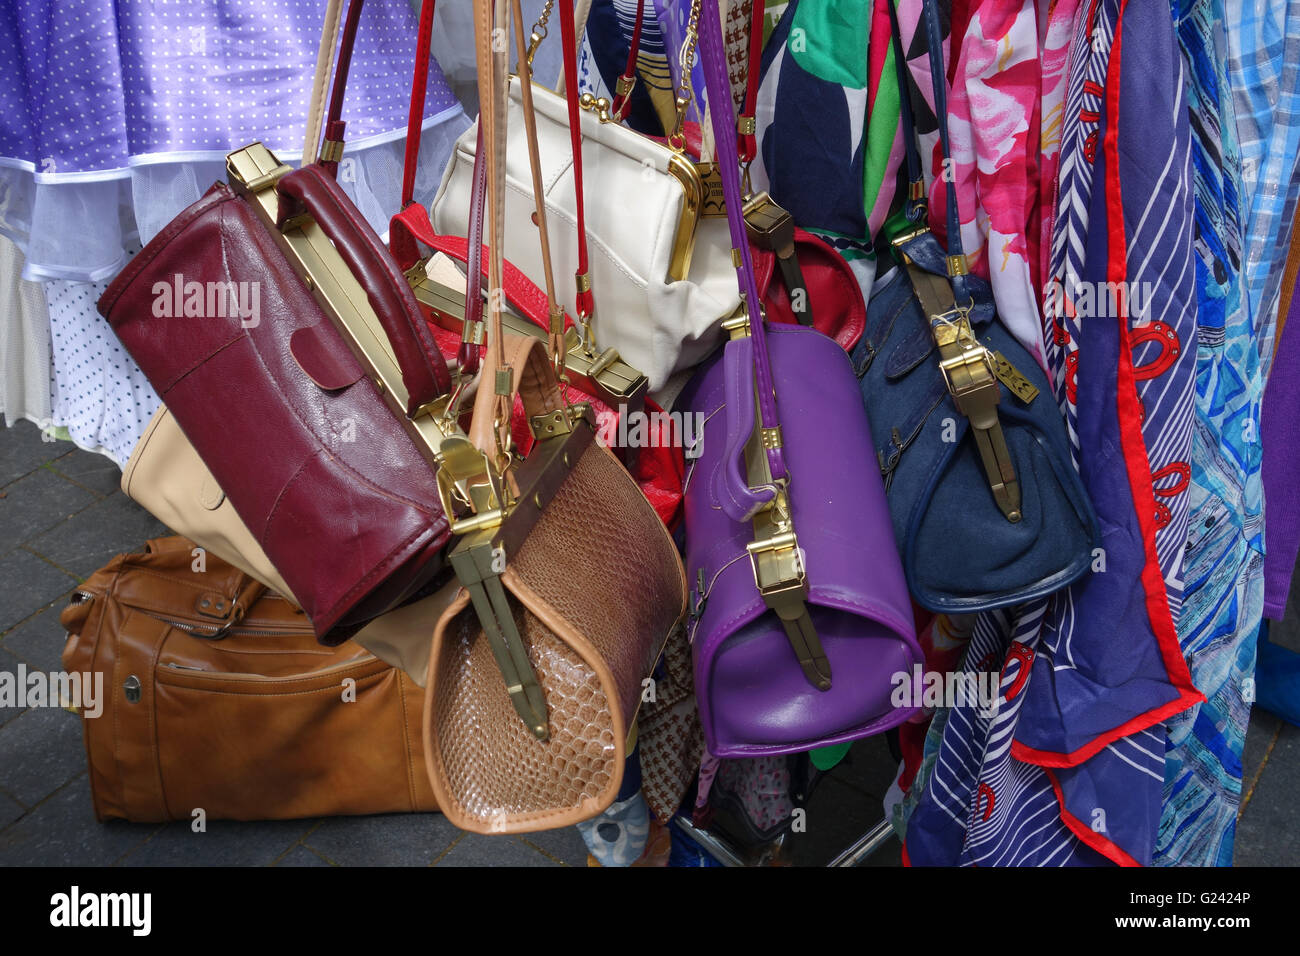 display of vintage handbags Stock Photo